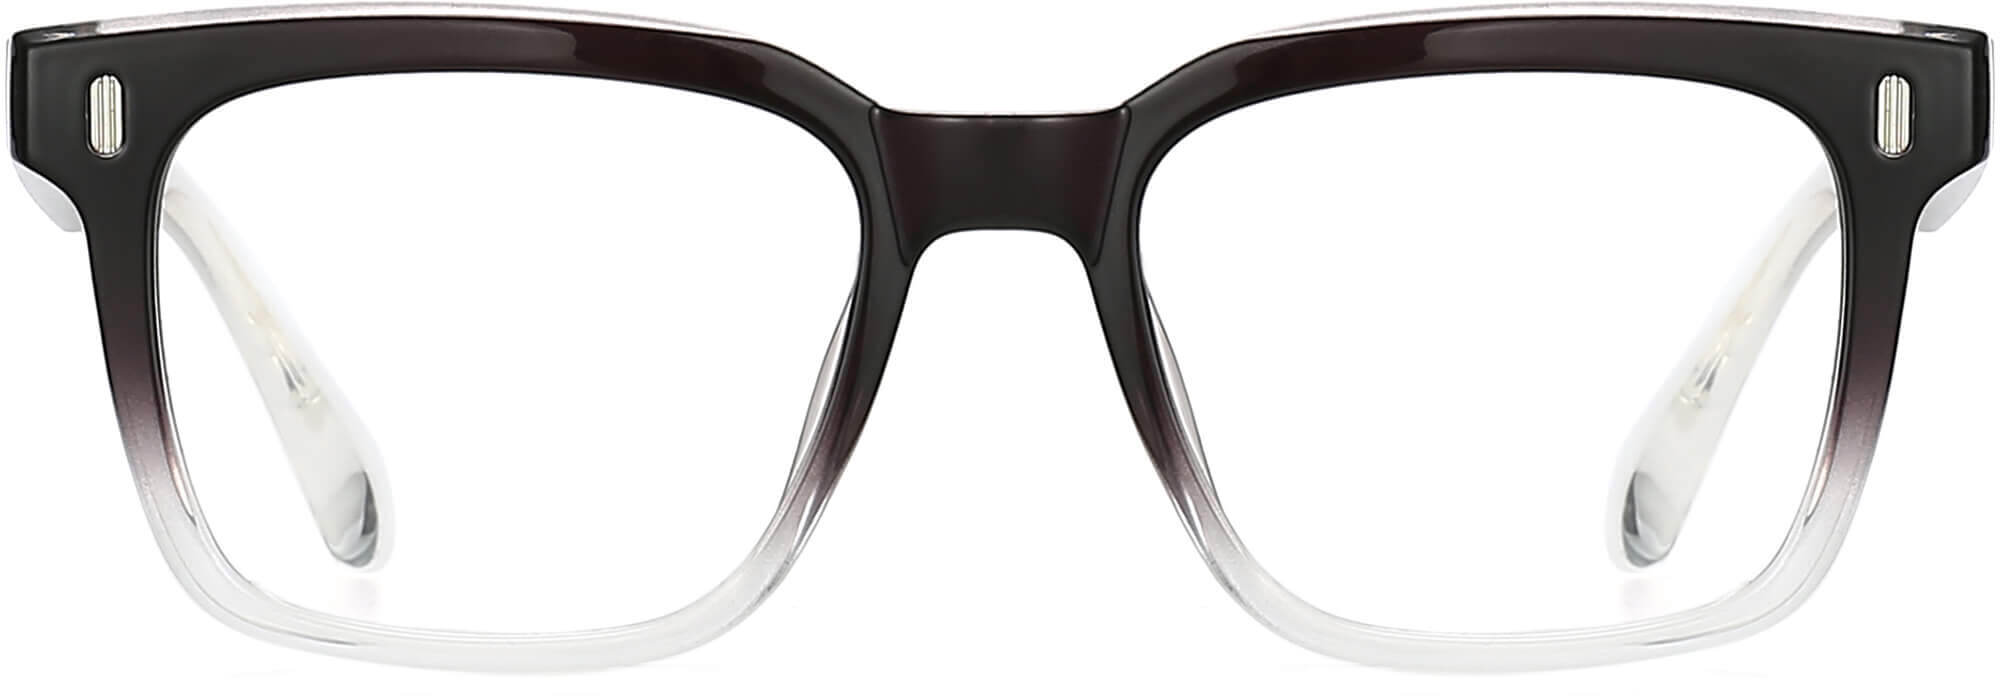 Solomon Square Black Eyeglasses from ANRRI, front view